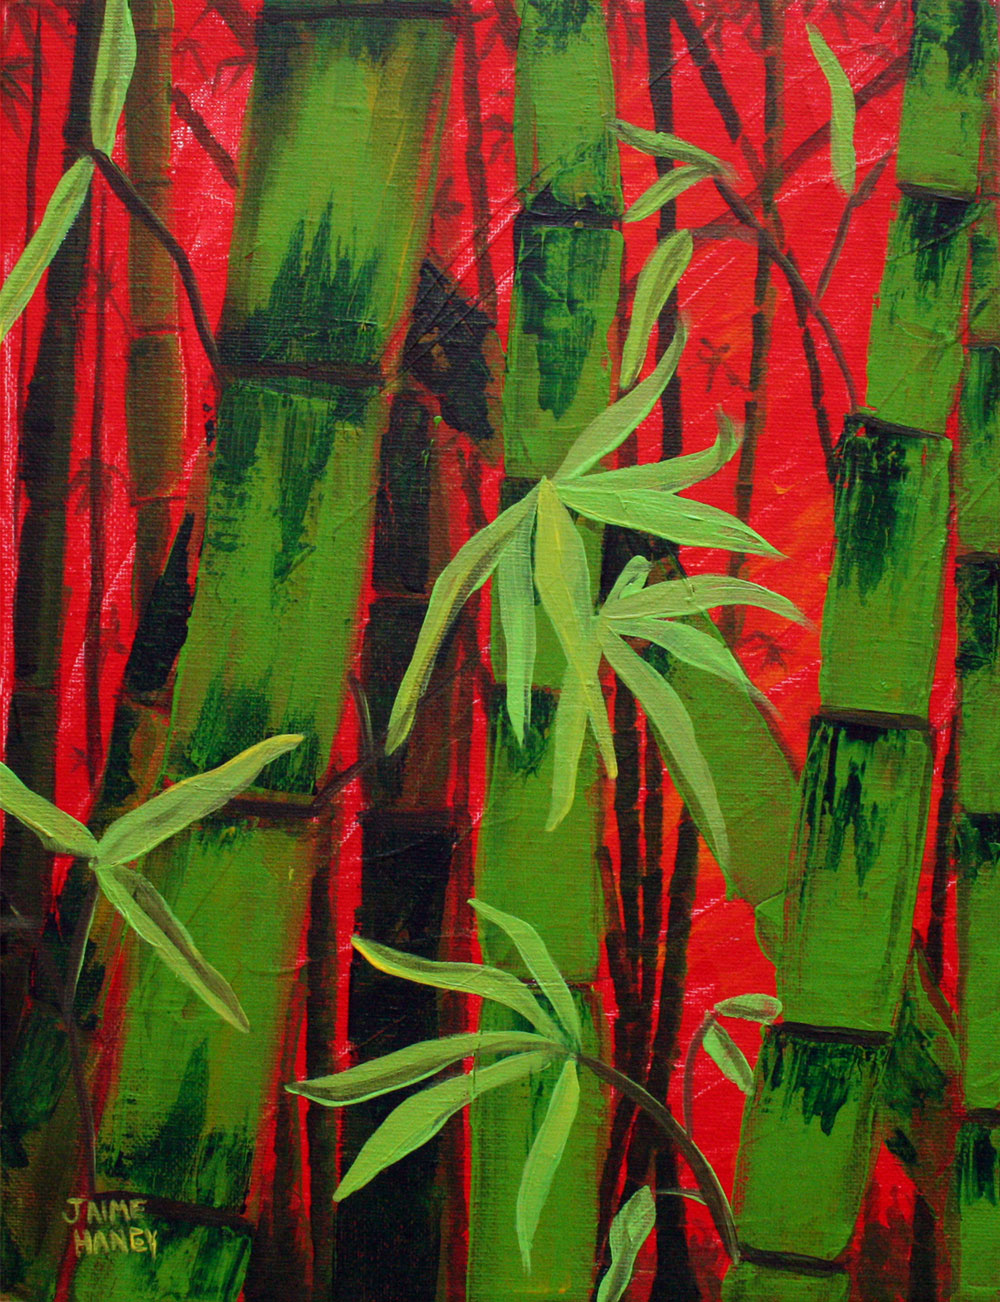 https://jaimehaney.com/wp-content/uploads/2014/09/Sultry-Bamboo-Forest-by-Jaime-Haney.jpg